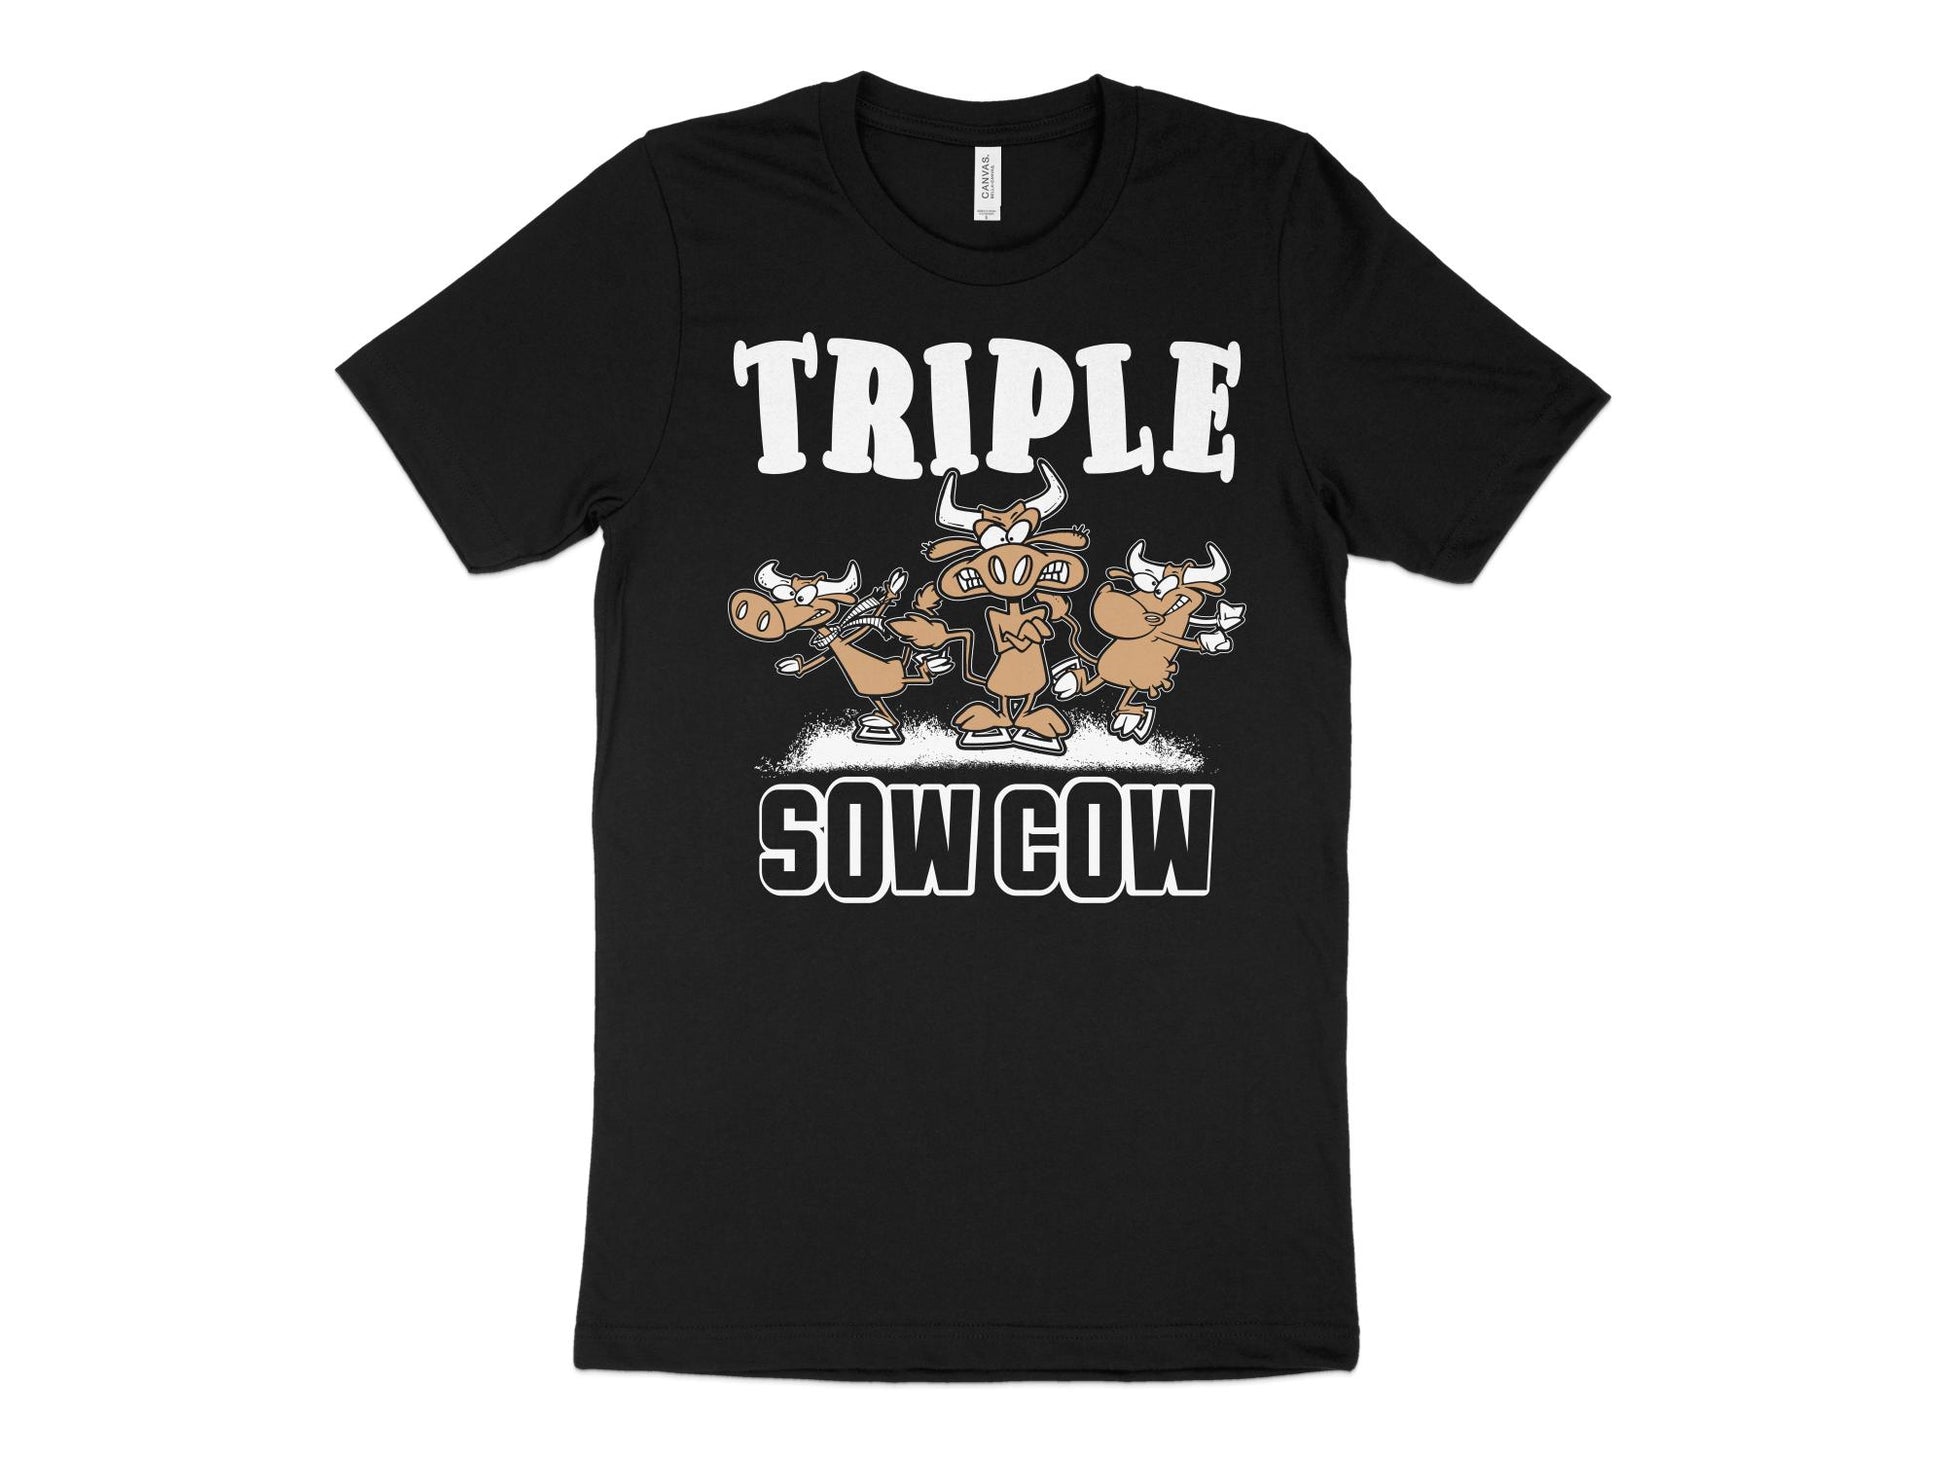 Figure Skating Shirt - Triple Sow Cow, black